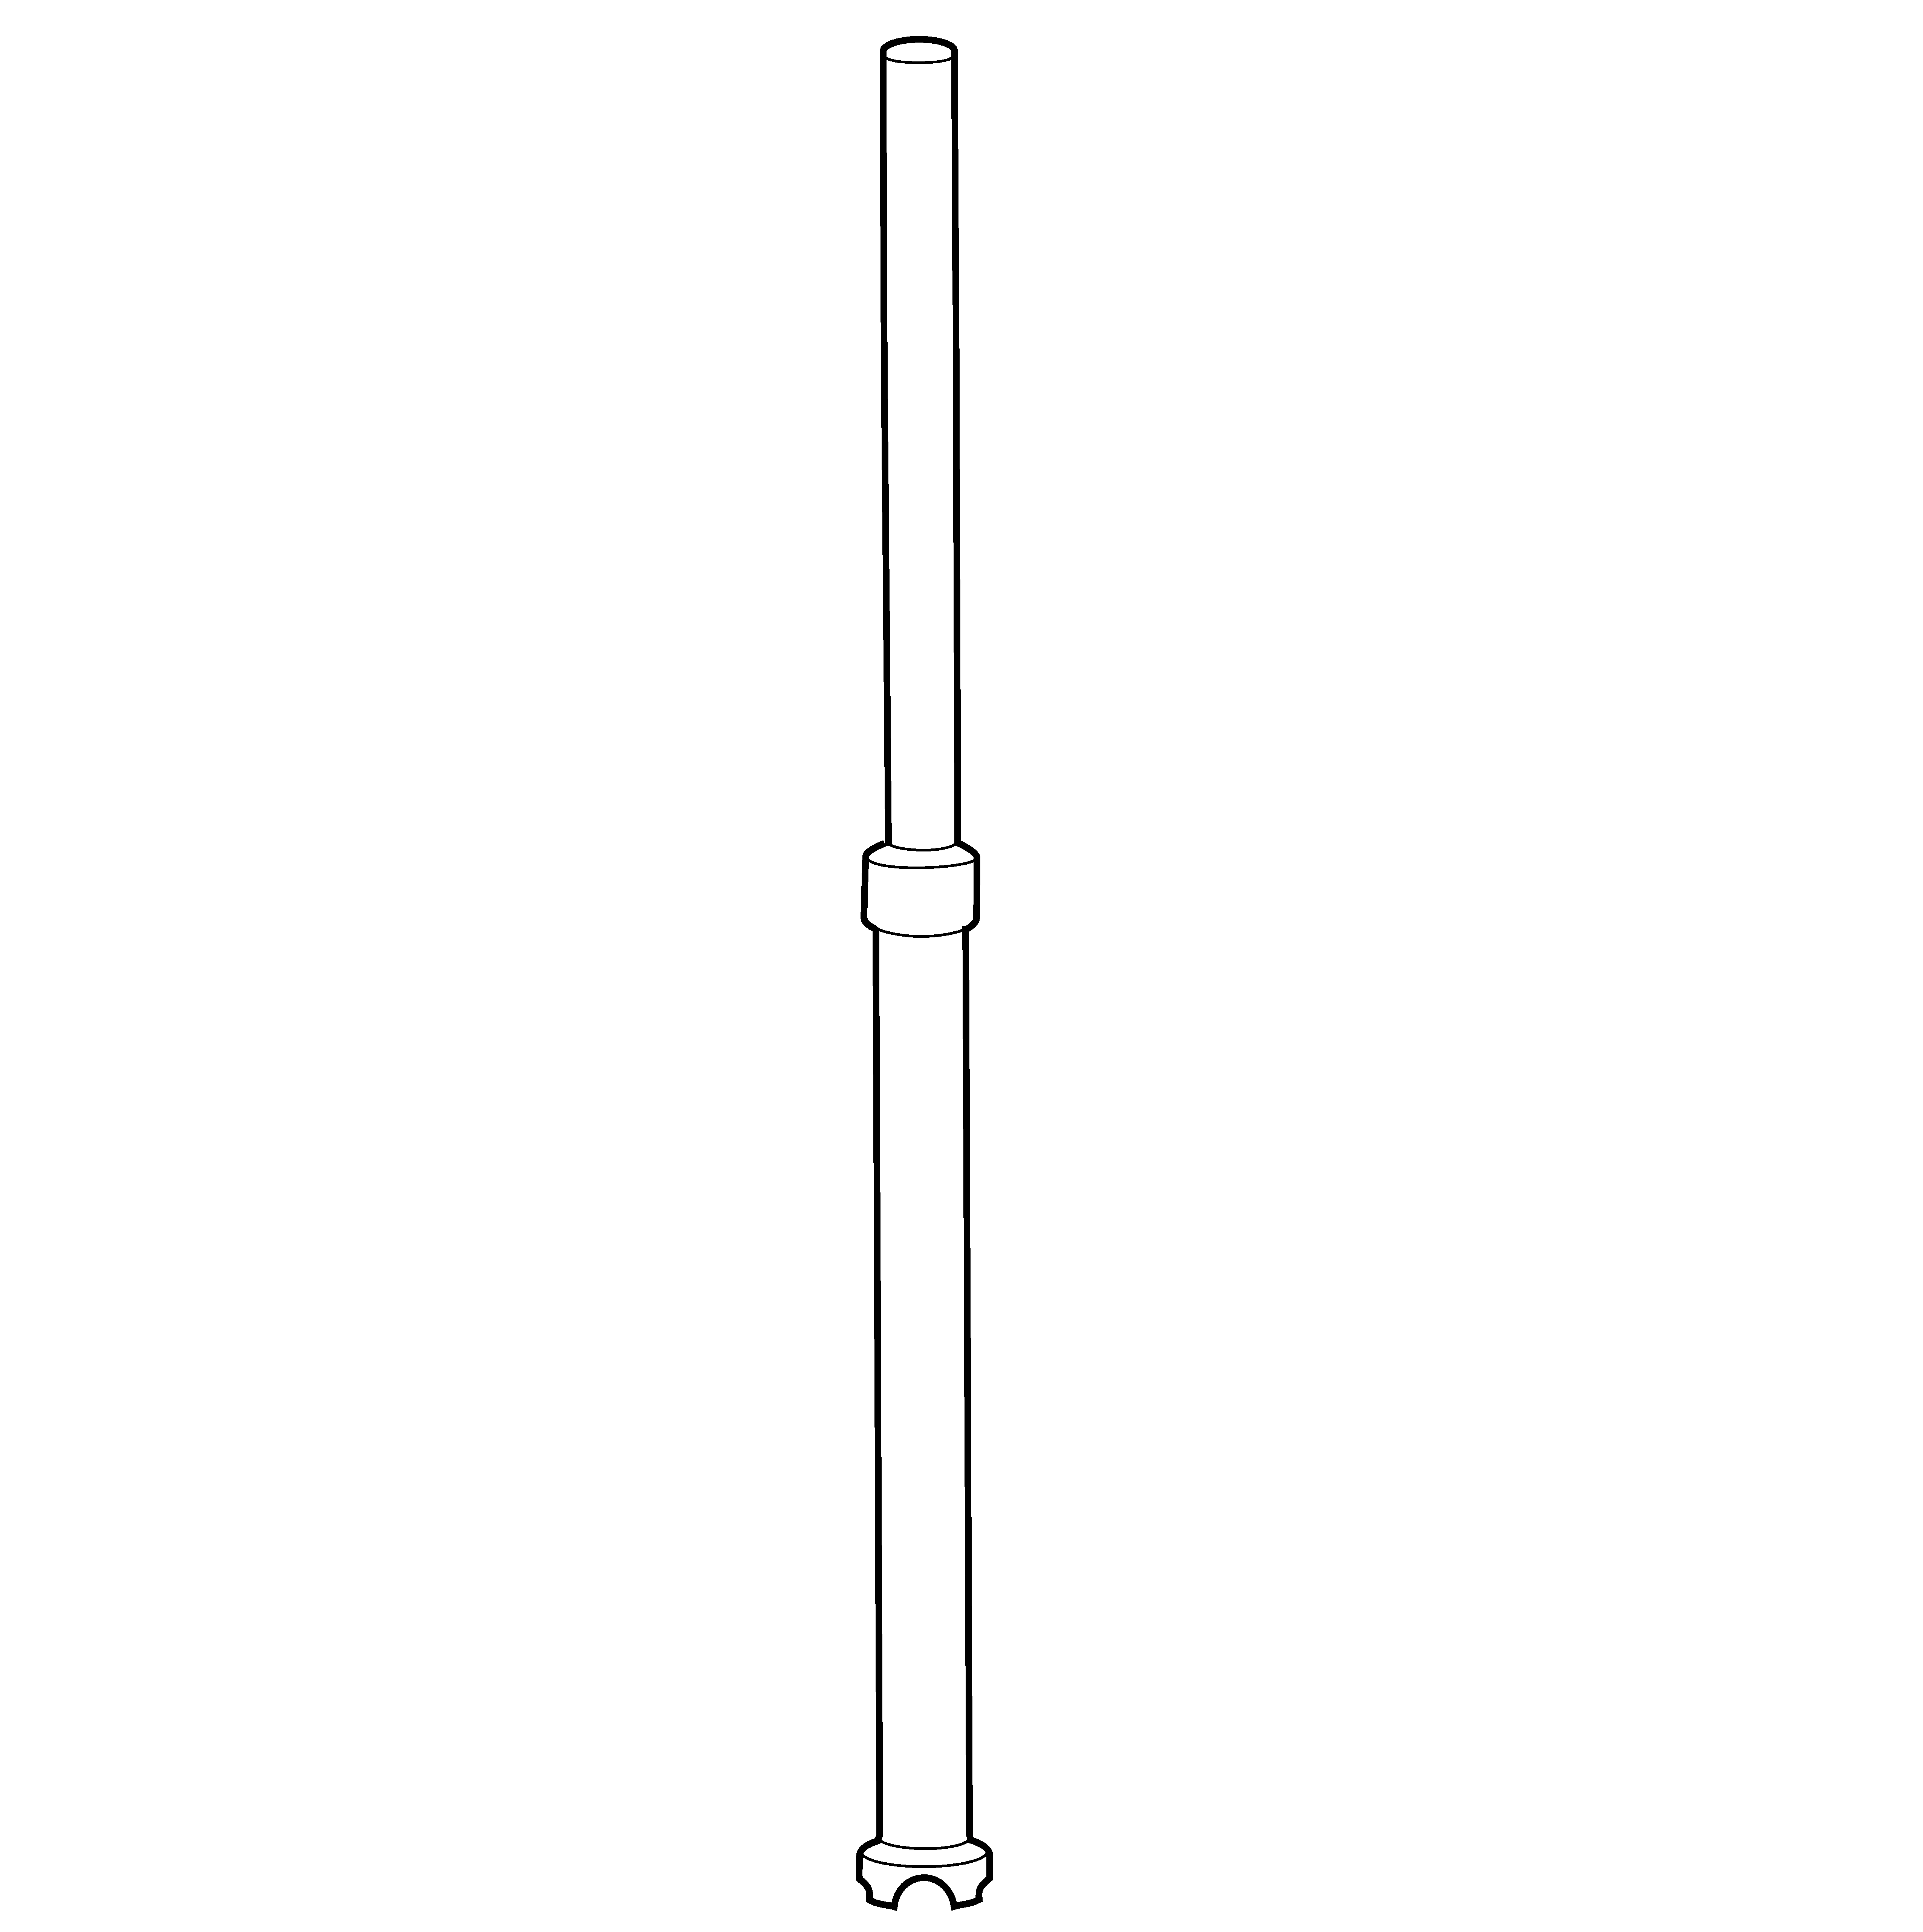 Eppendorf, Telescopic aspirating tube, 2.5 mL, 5 mL, 10 mL, 25 mL, 50 mL, 100 mL